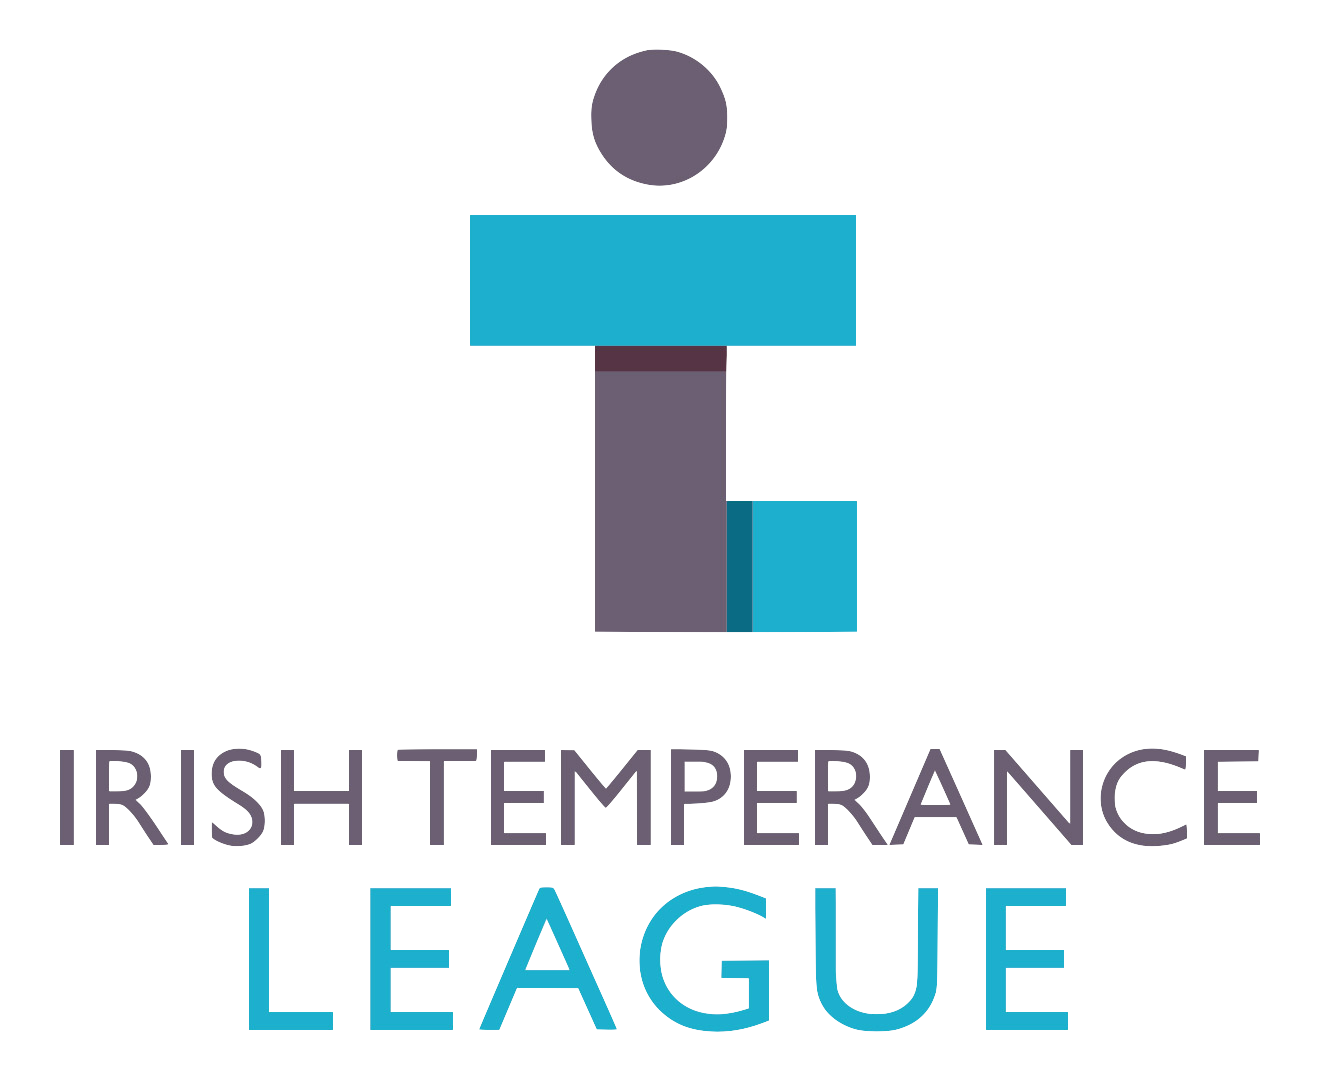 Irish Temperance League